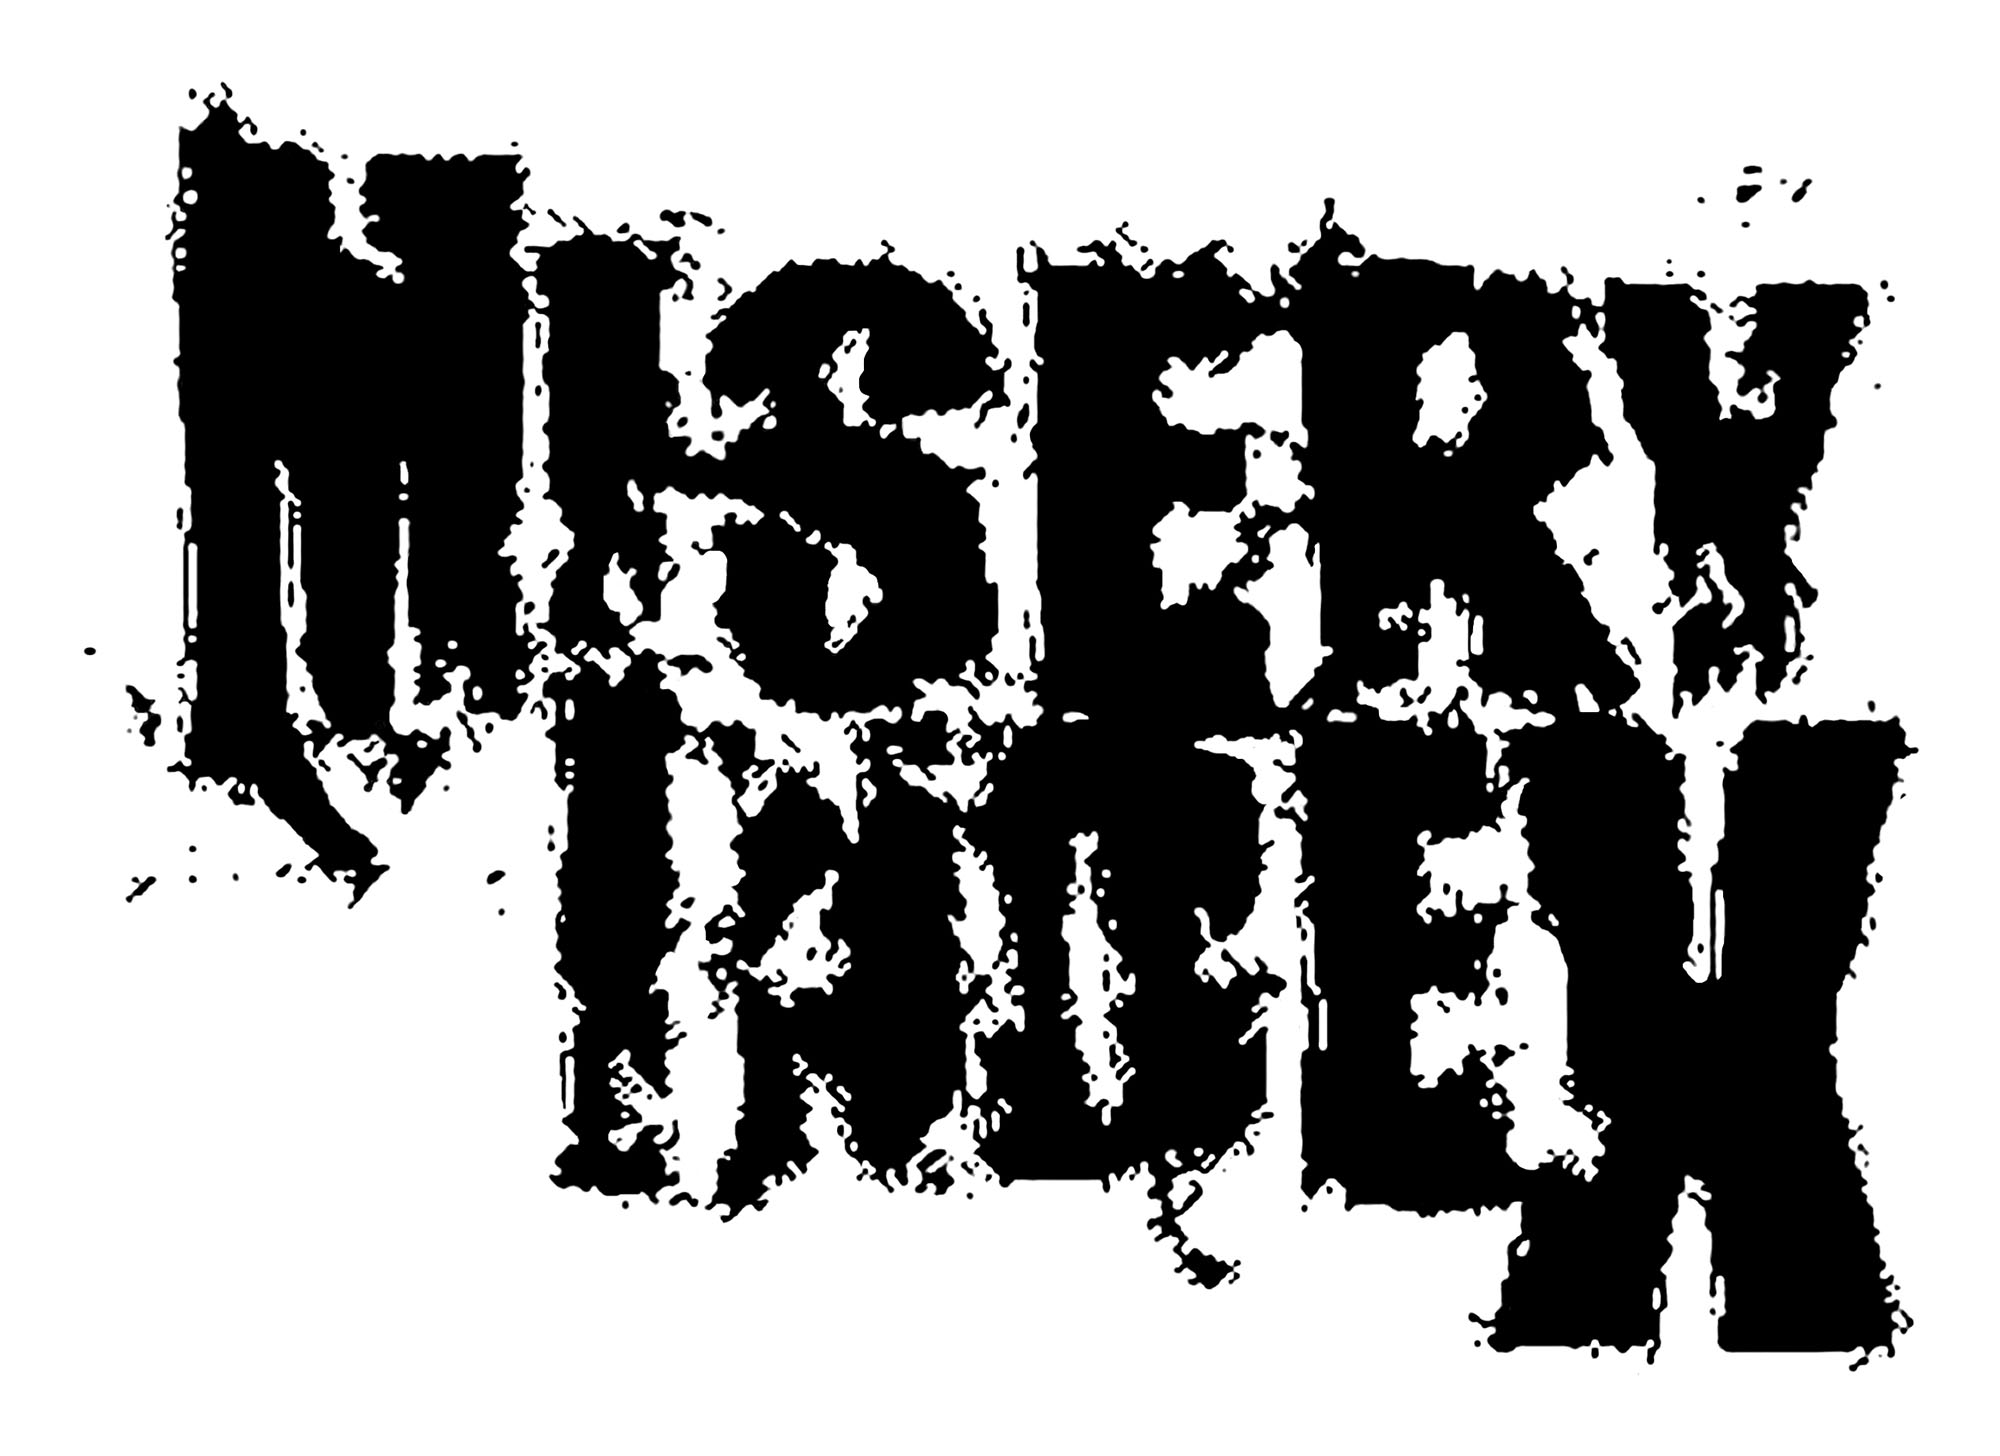 Misery Index #19